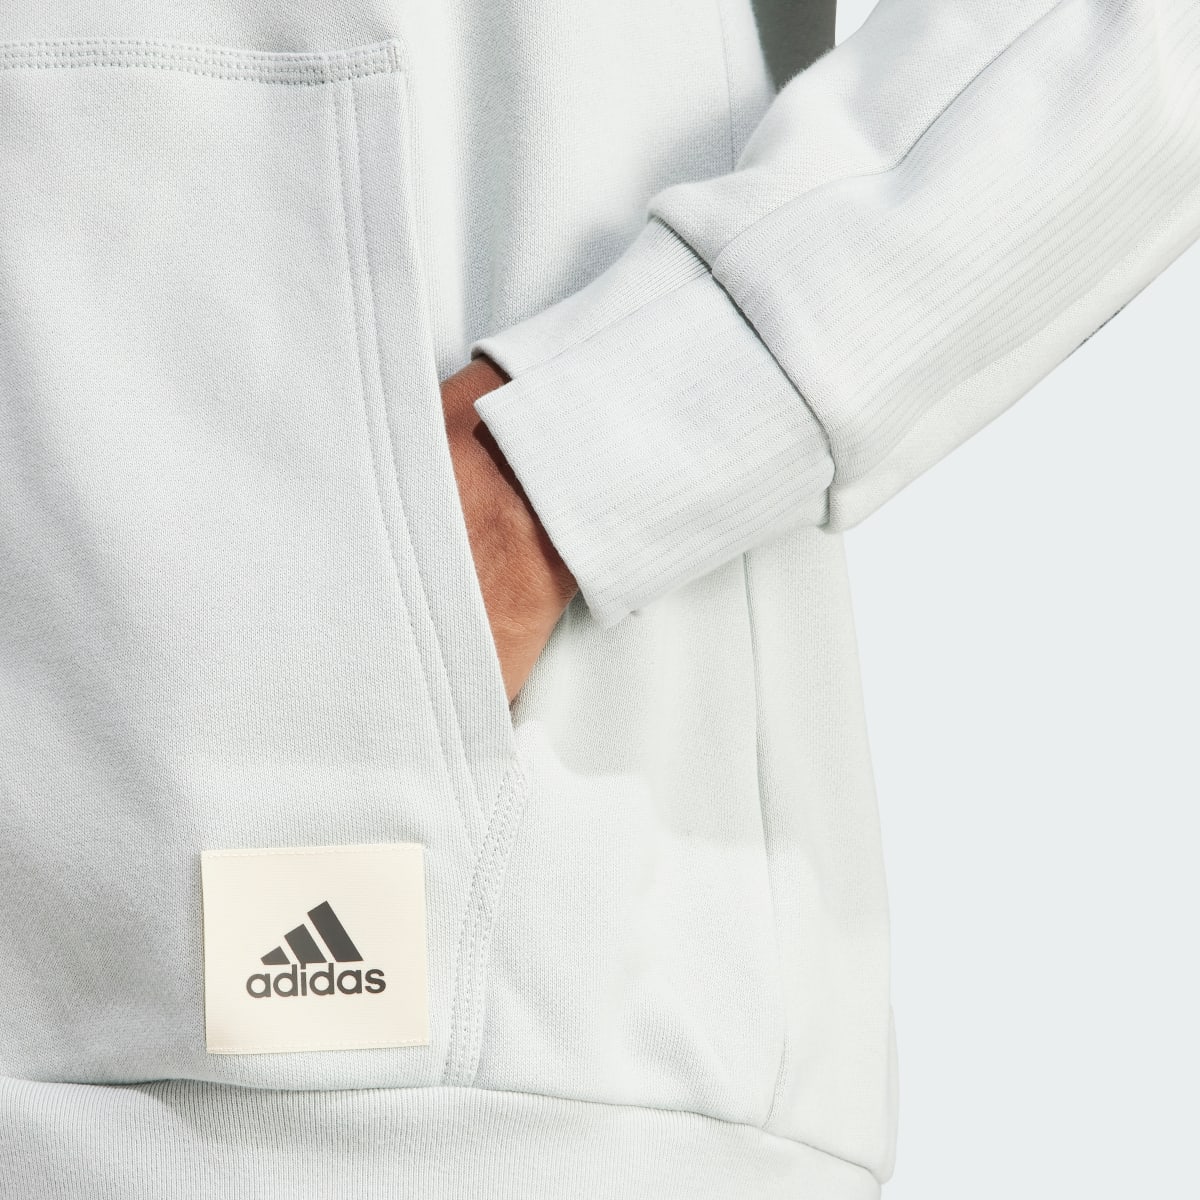 Adidas Lounge French Terry Full-Zip Sweatshirt. 7